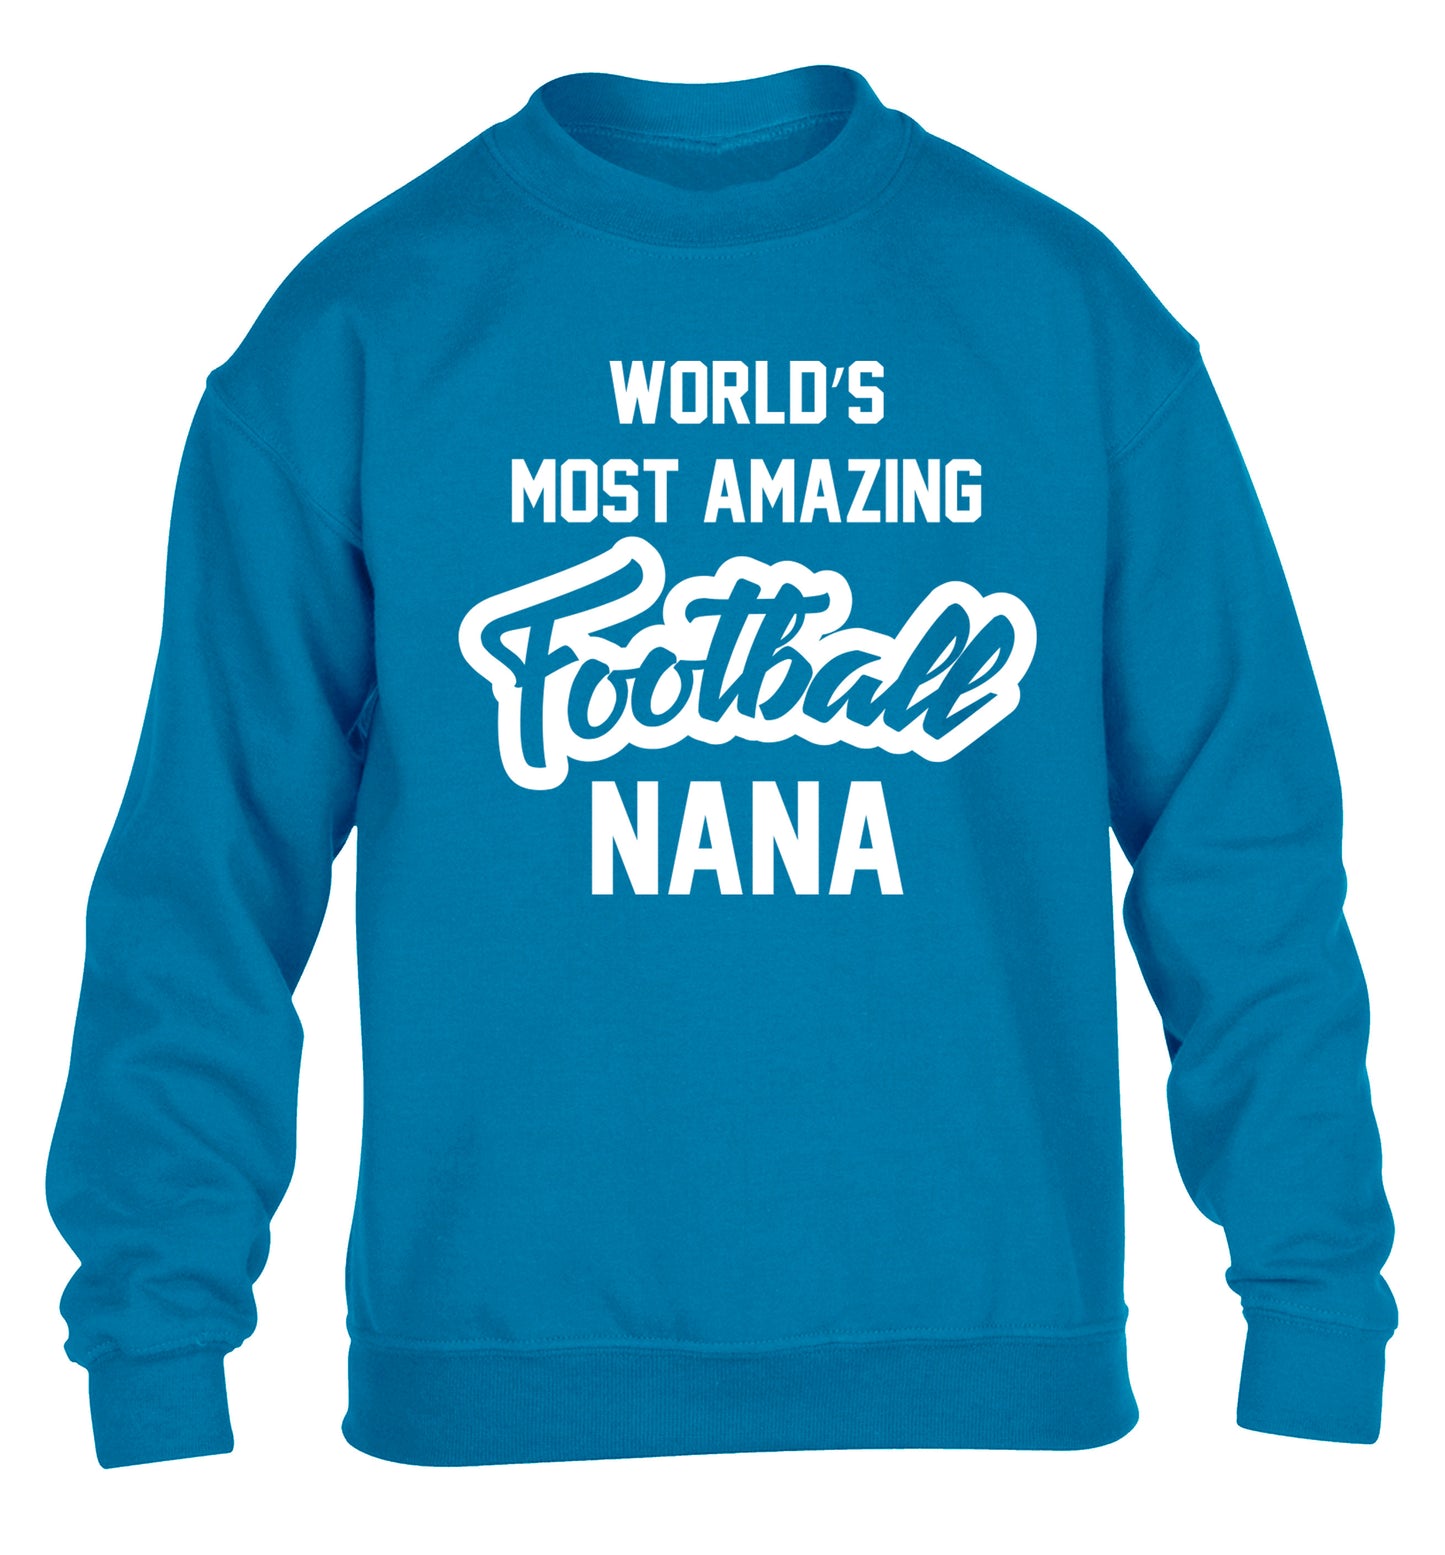 Worlds most amazing football nana children's blue sweater 12-14 Years